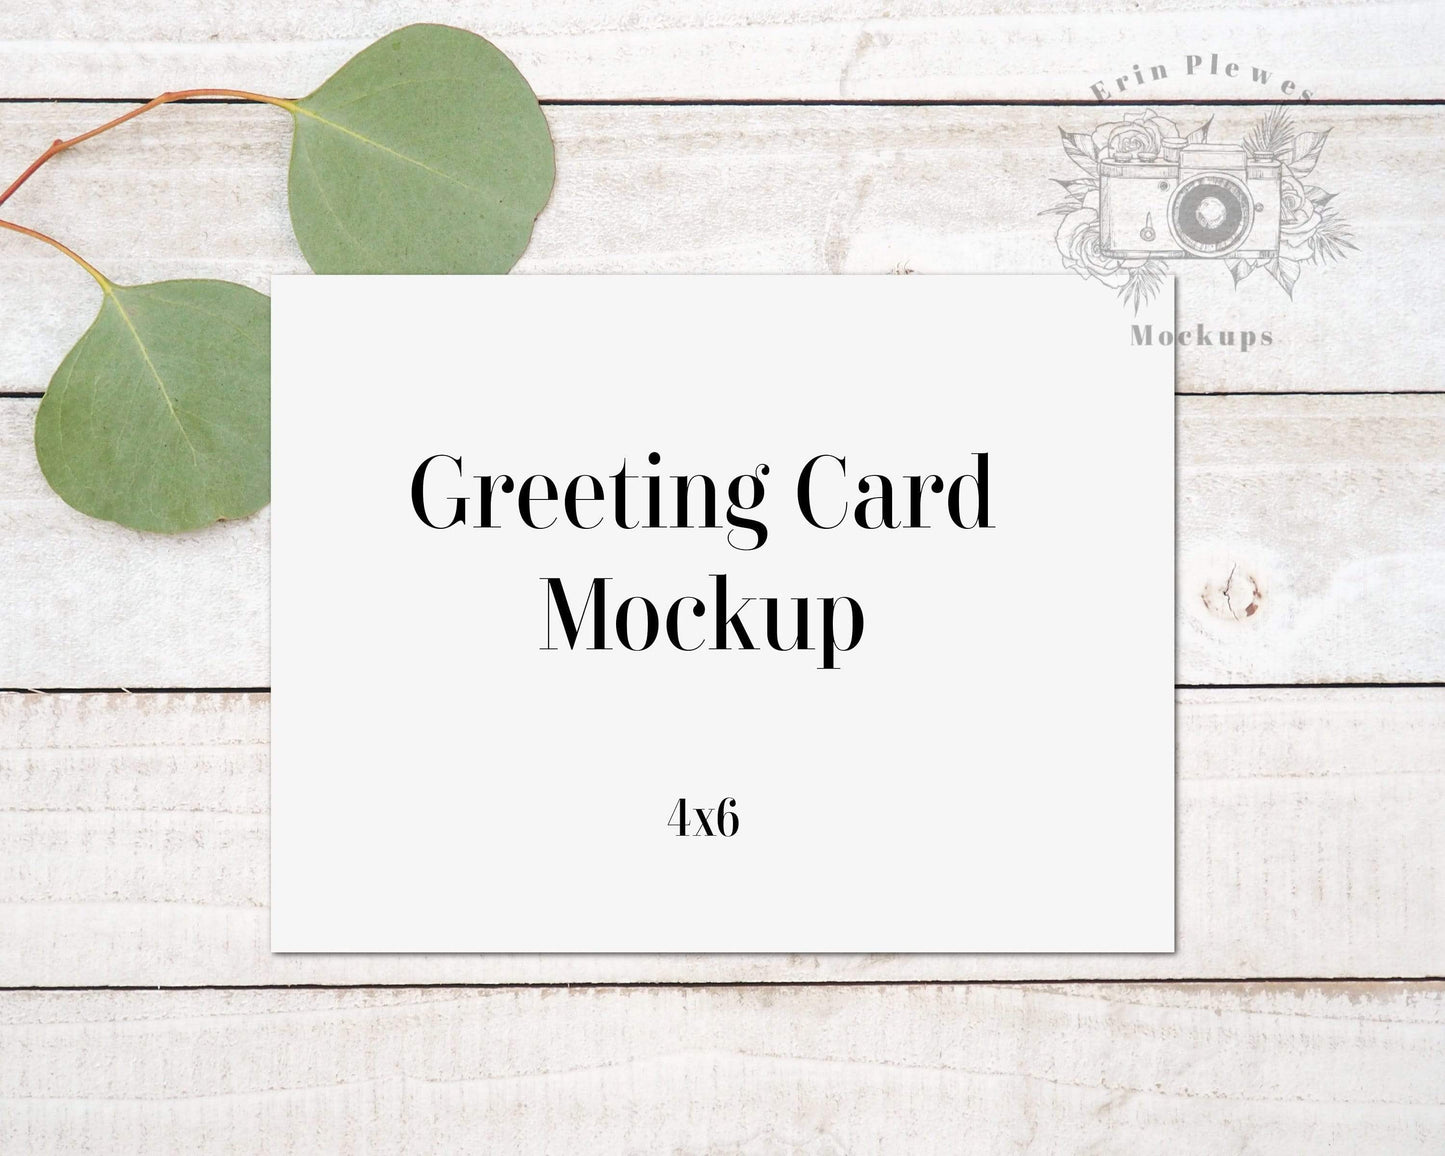 Erin Plewes Mockups 4x6 Greeting Card Mockup, 4"x6" Invitation Mock up on Rustic Wood, Styled Stock Photo, Instant Digital Download Jpeg Template